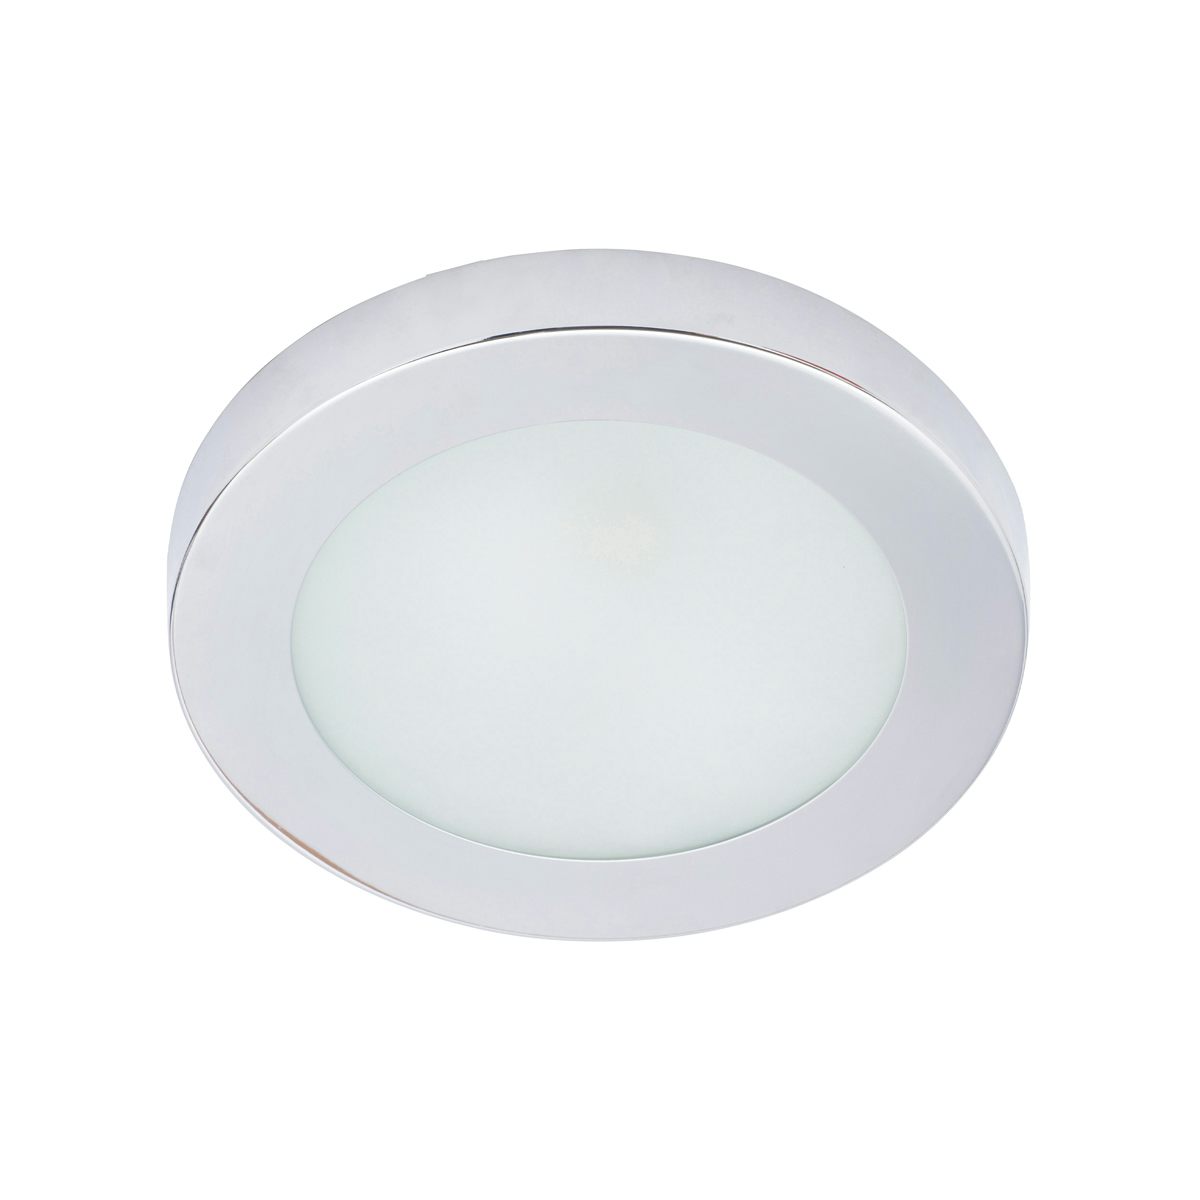 Forum Llum chrome small round flush bathroom ceiling light